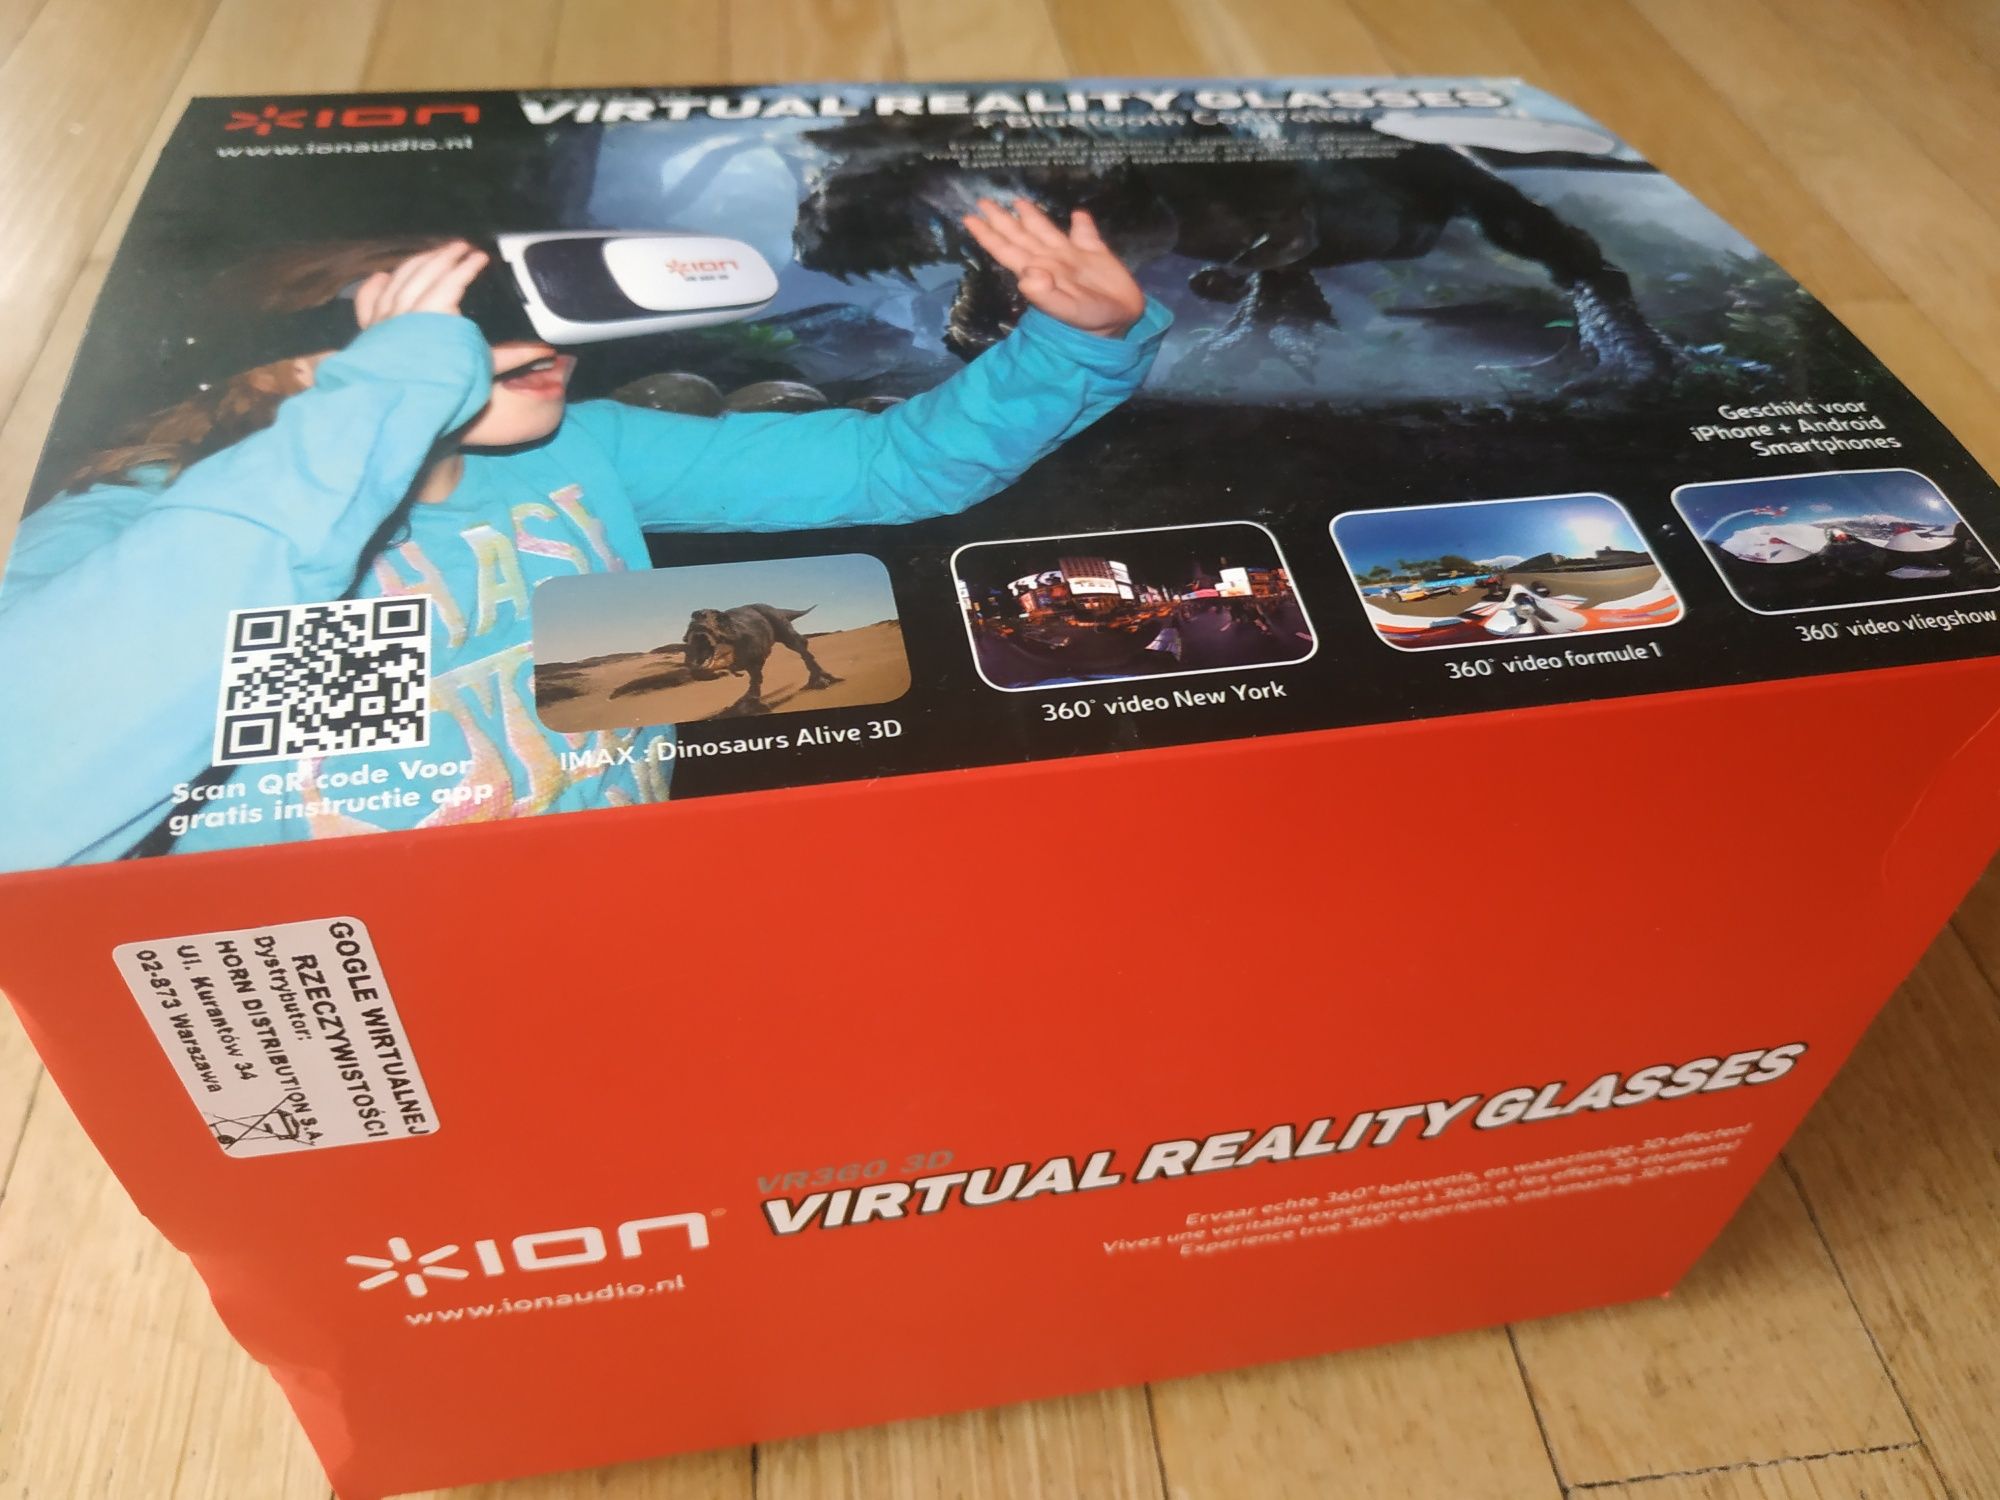 ION VR 3603D okulary VR Virtual Reality Glasses - jak NOWE